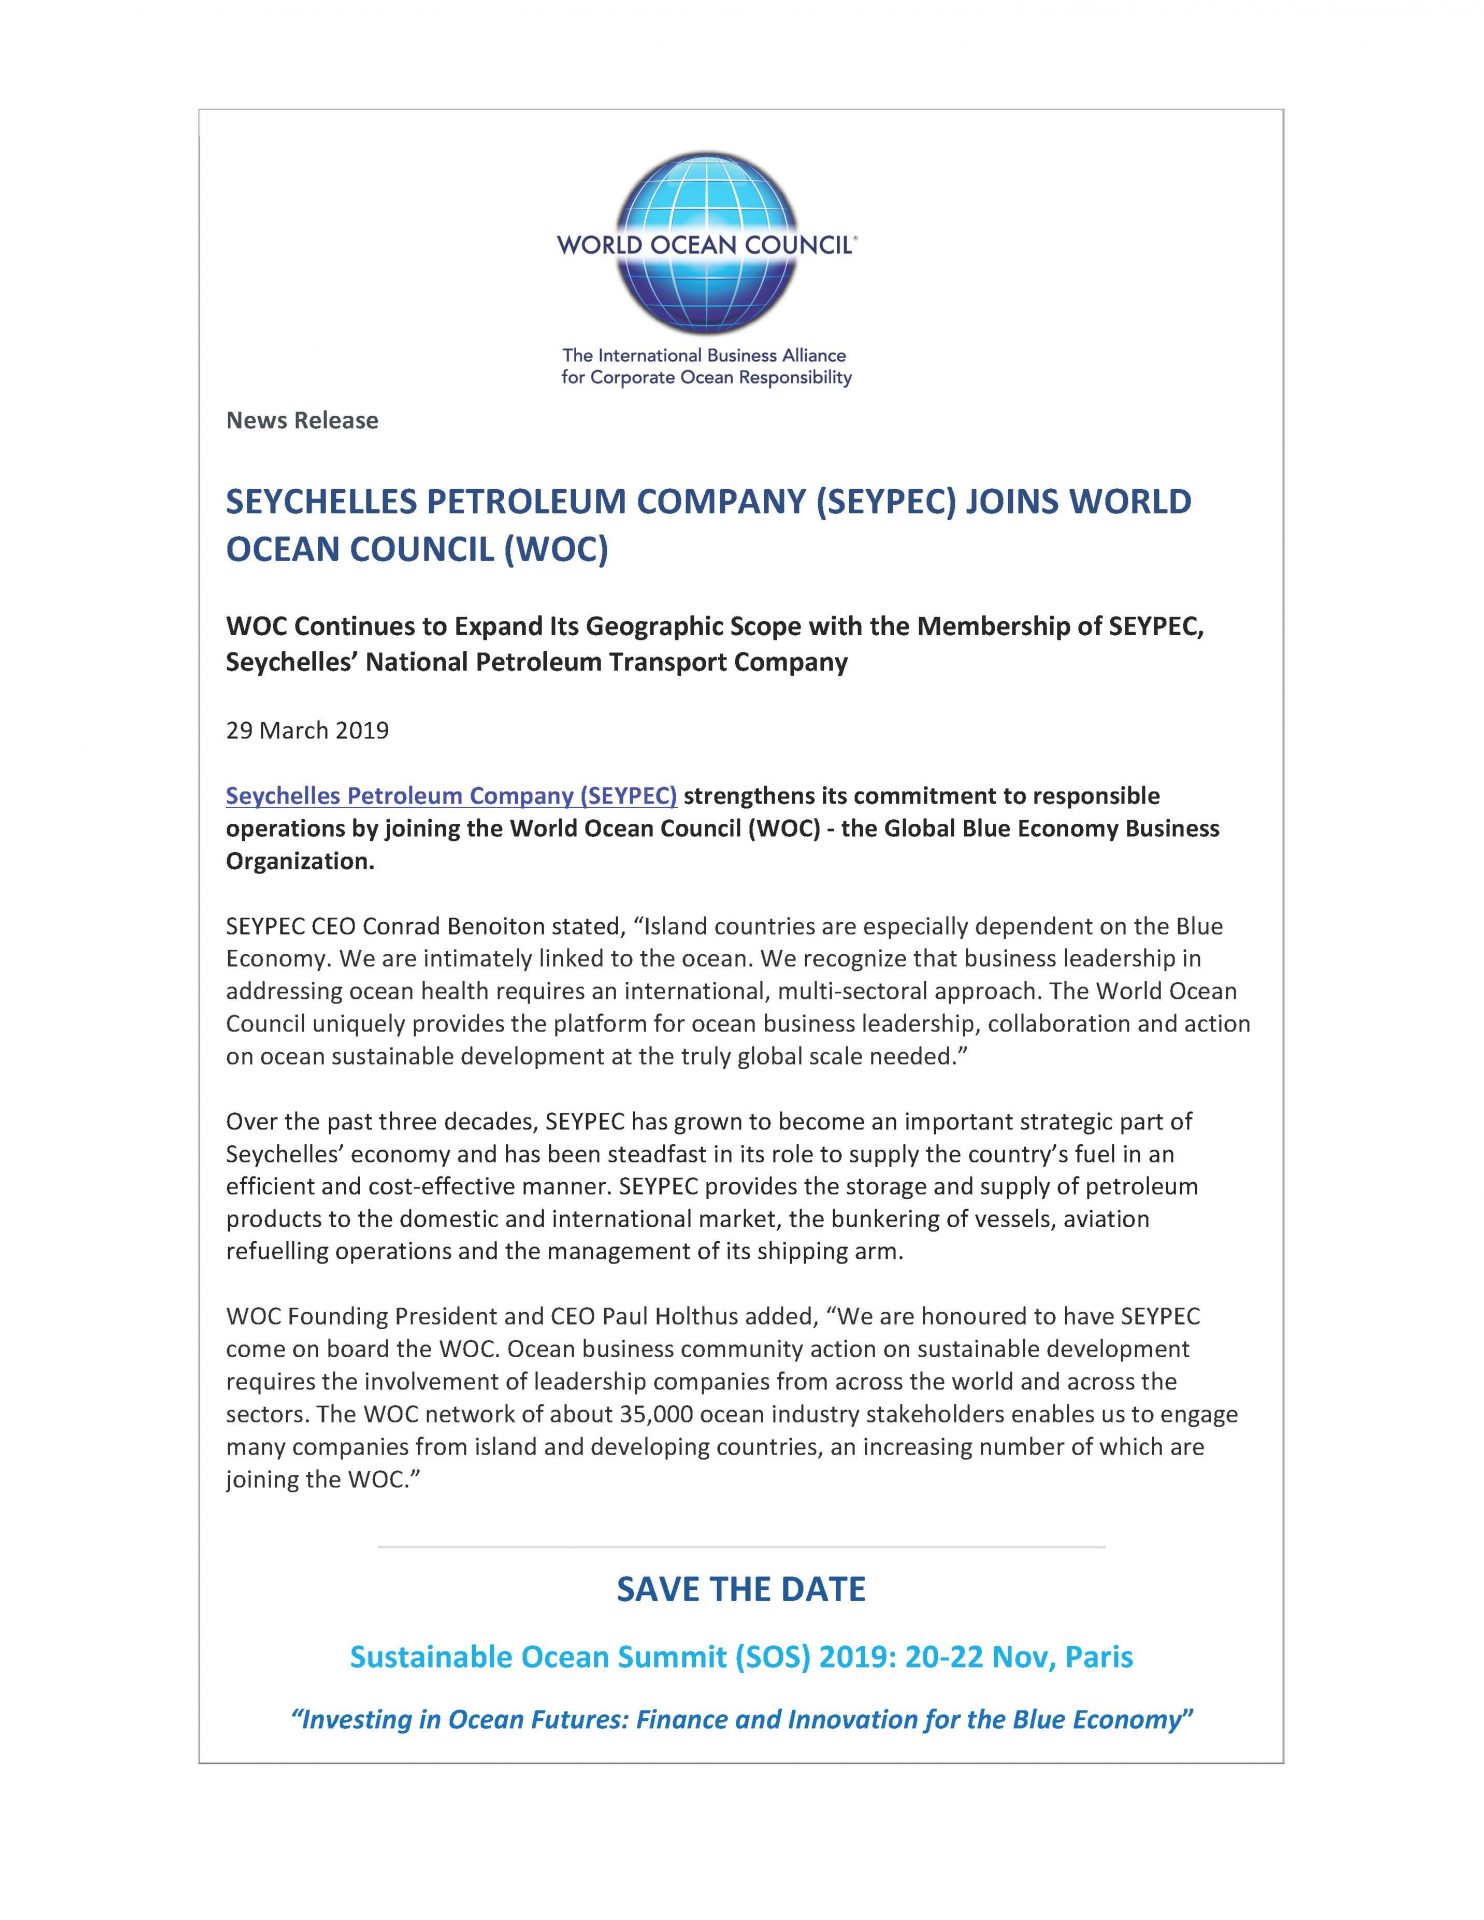 Seychelles Petroleum Company (SEYPEC) Joins World Ocean Council (WOC) - 29 March 2019